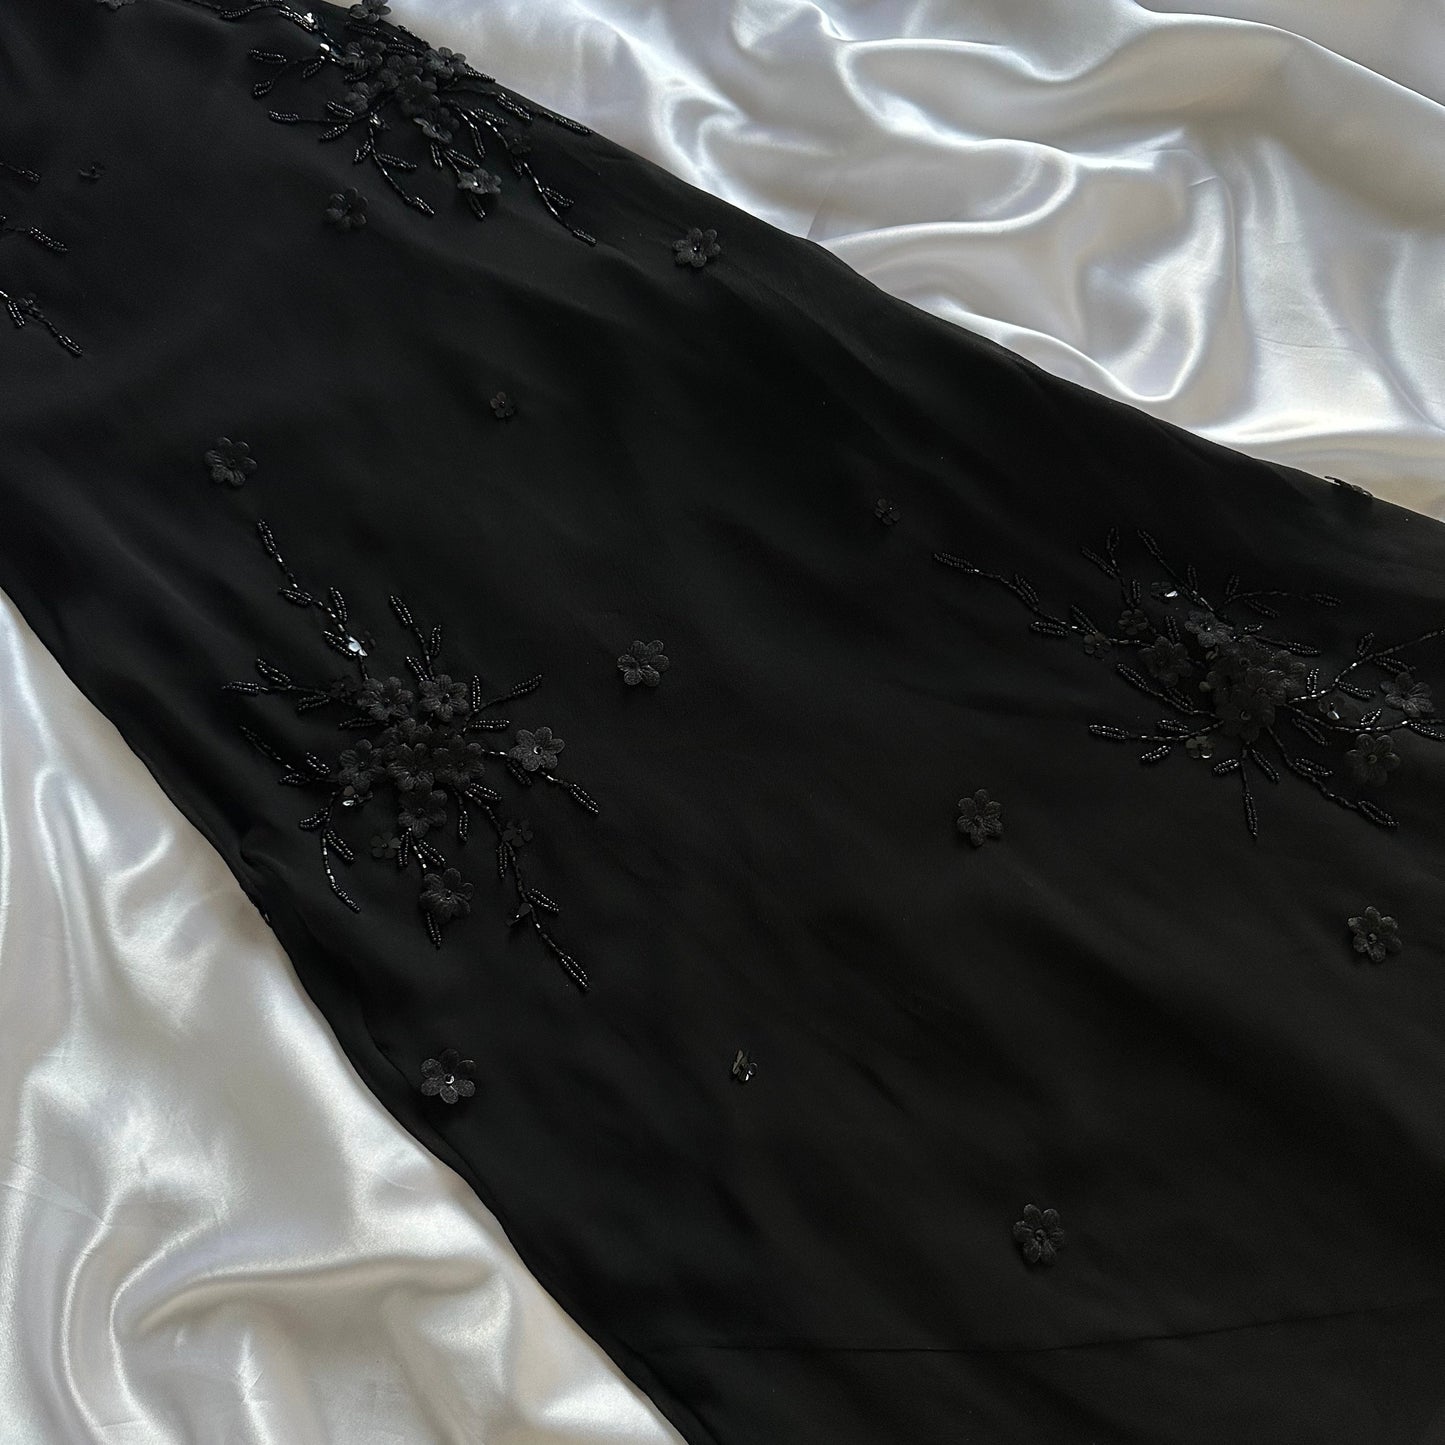 Noir Elegance Vintage Black Silk Beaded Floral Appliqué Maxi Dress